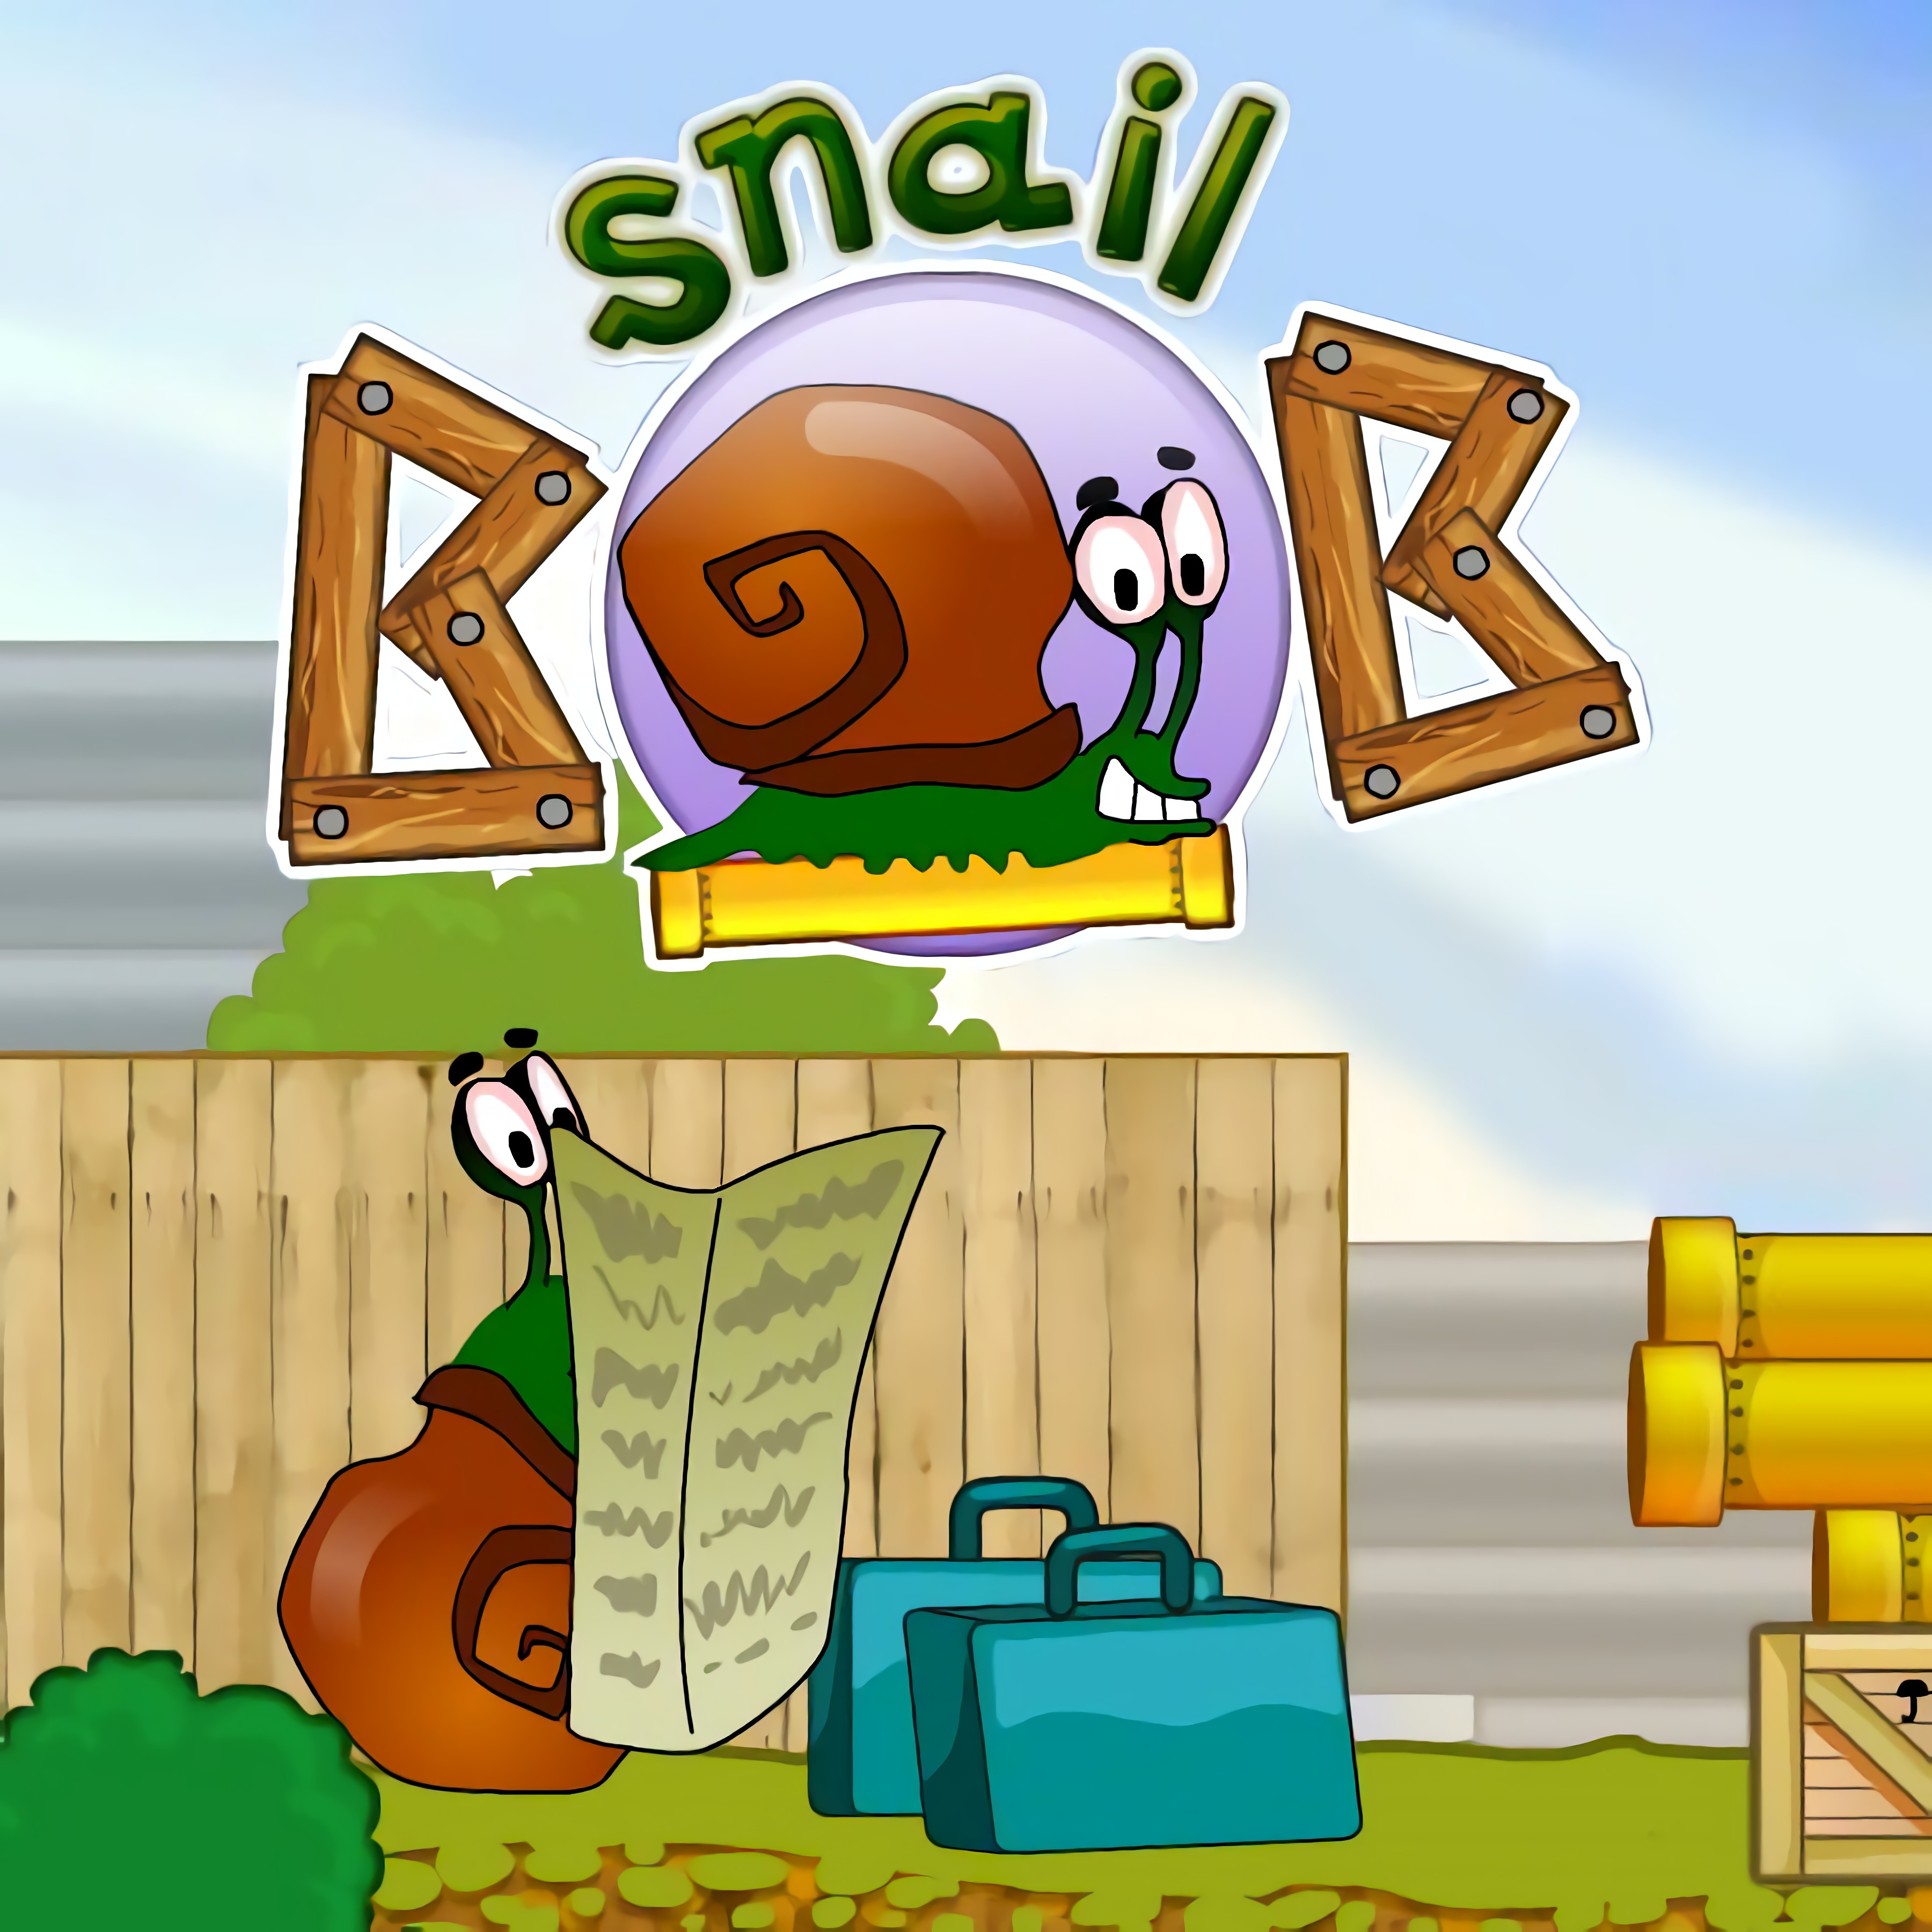 free download snail bob agame